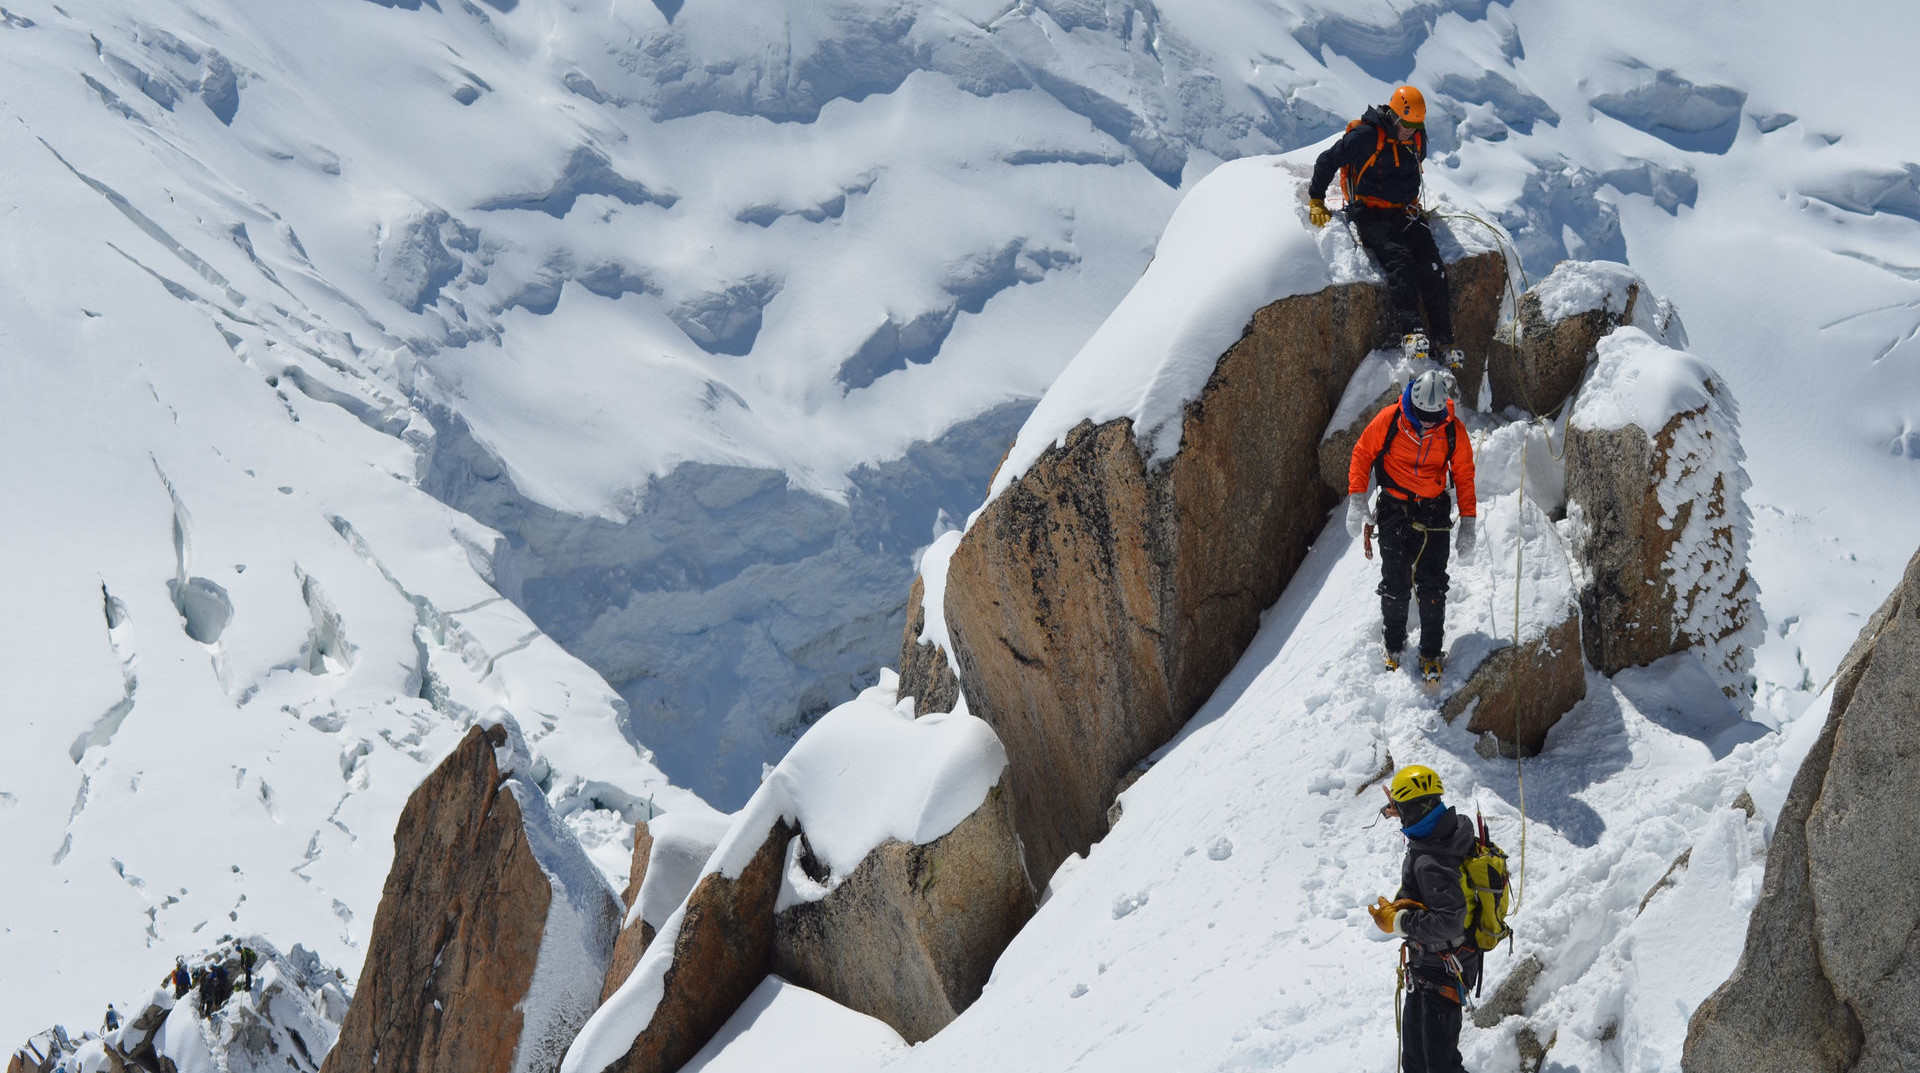 Mont blanc climb difficulty